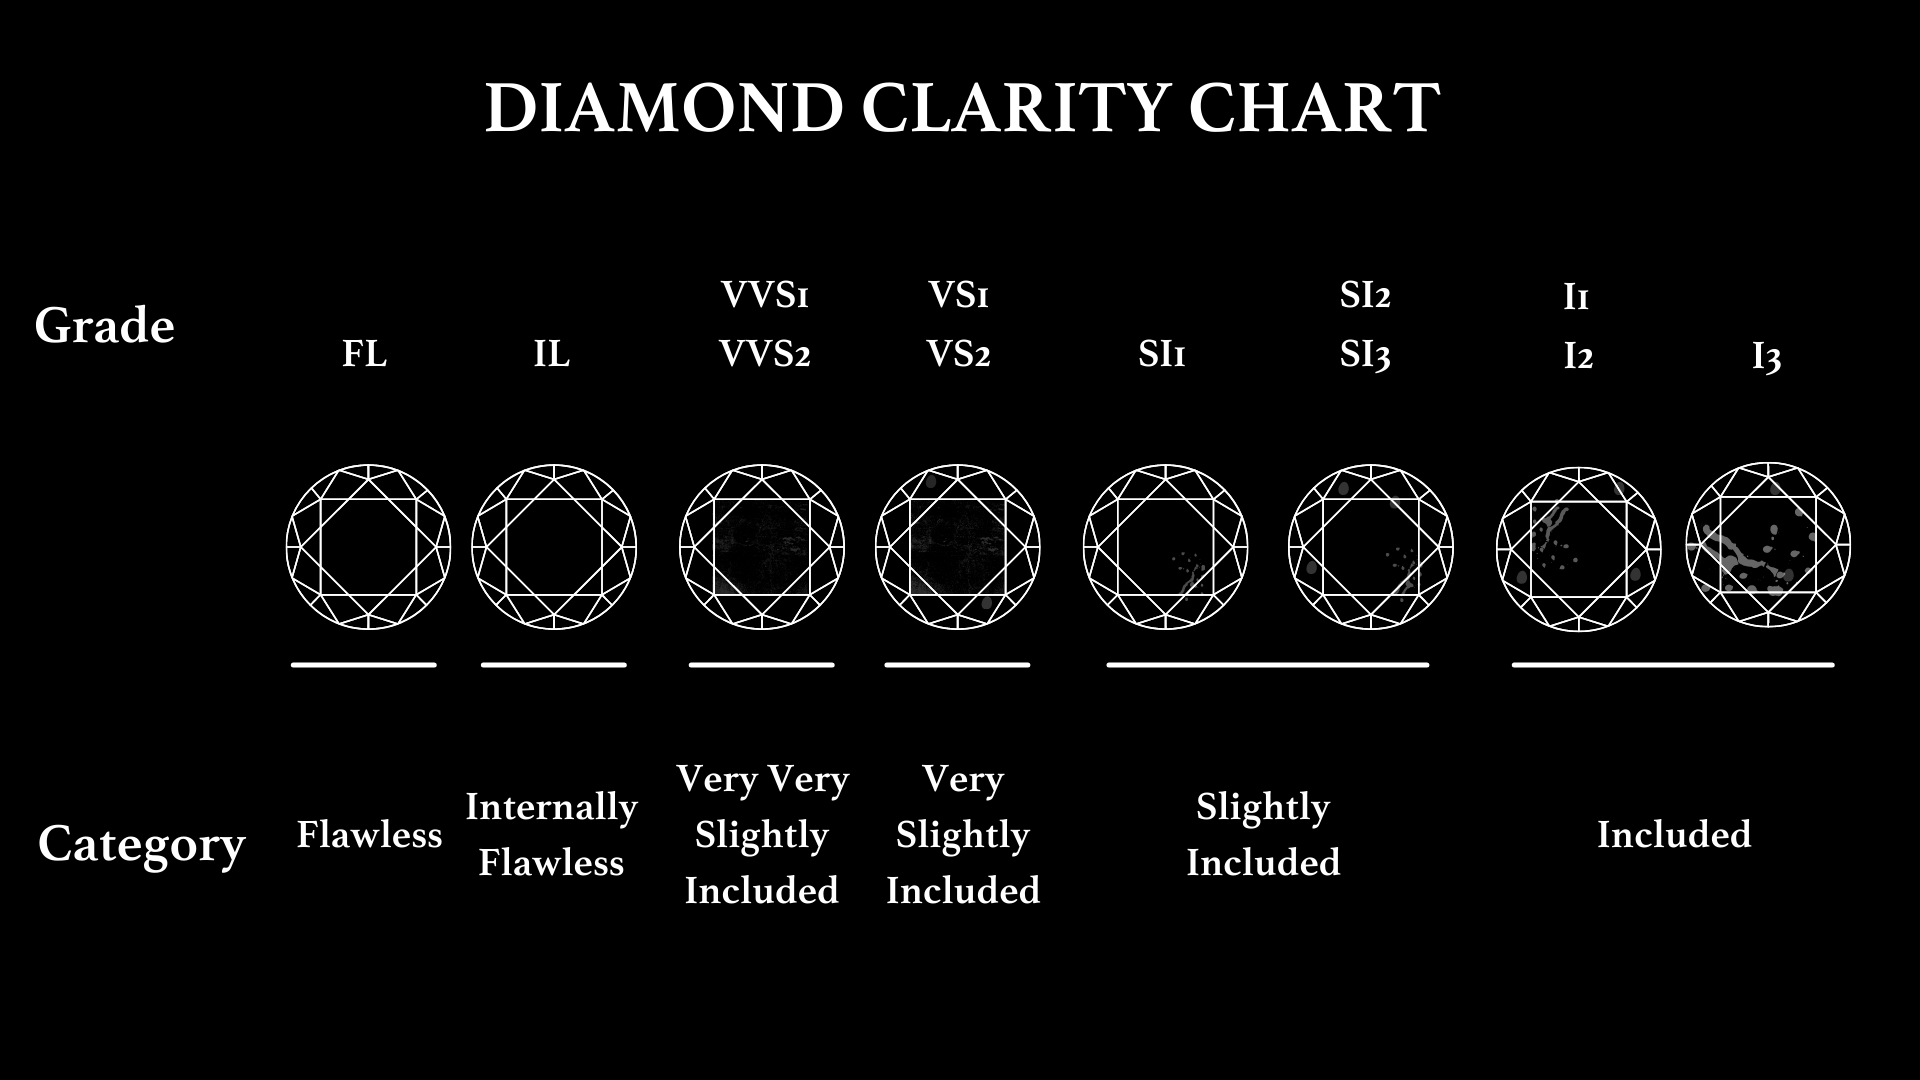 Choosing the perfect Diamond – By David